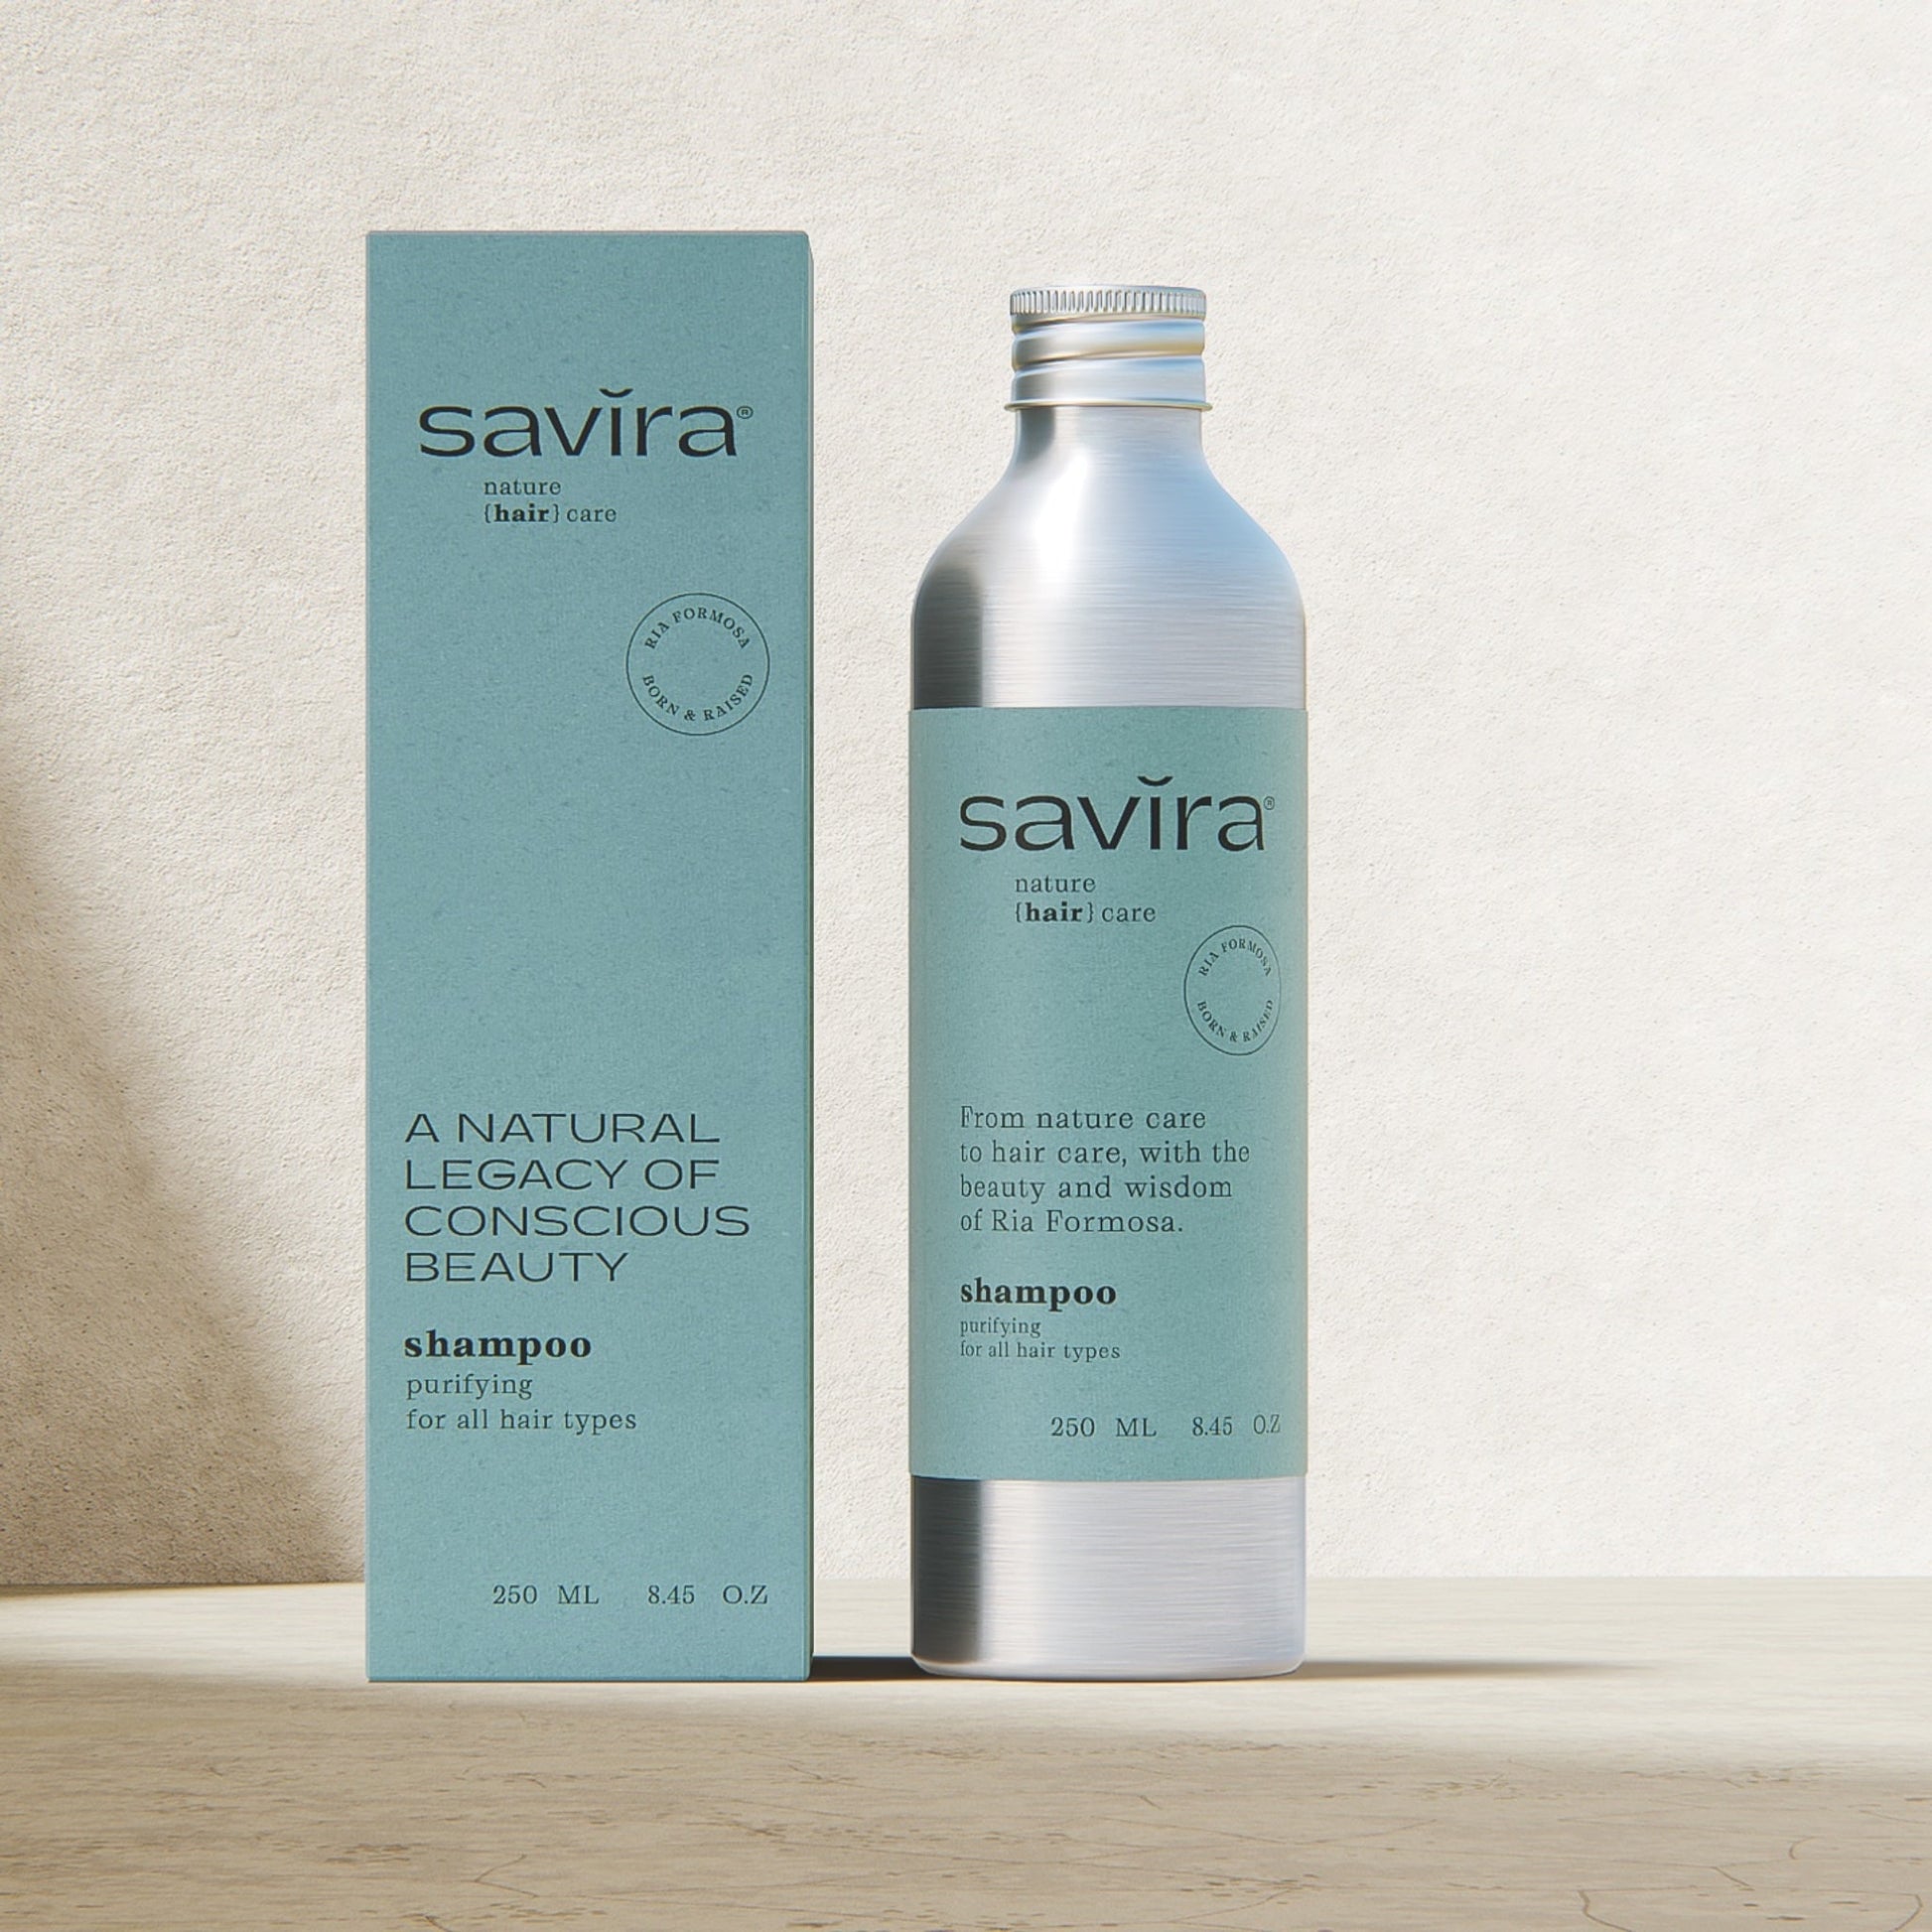 Savira Ria Formosa Purifying Shampoo